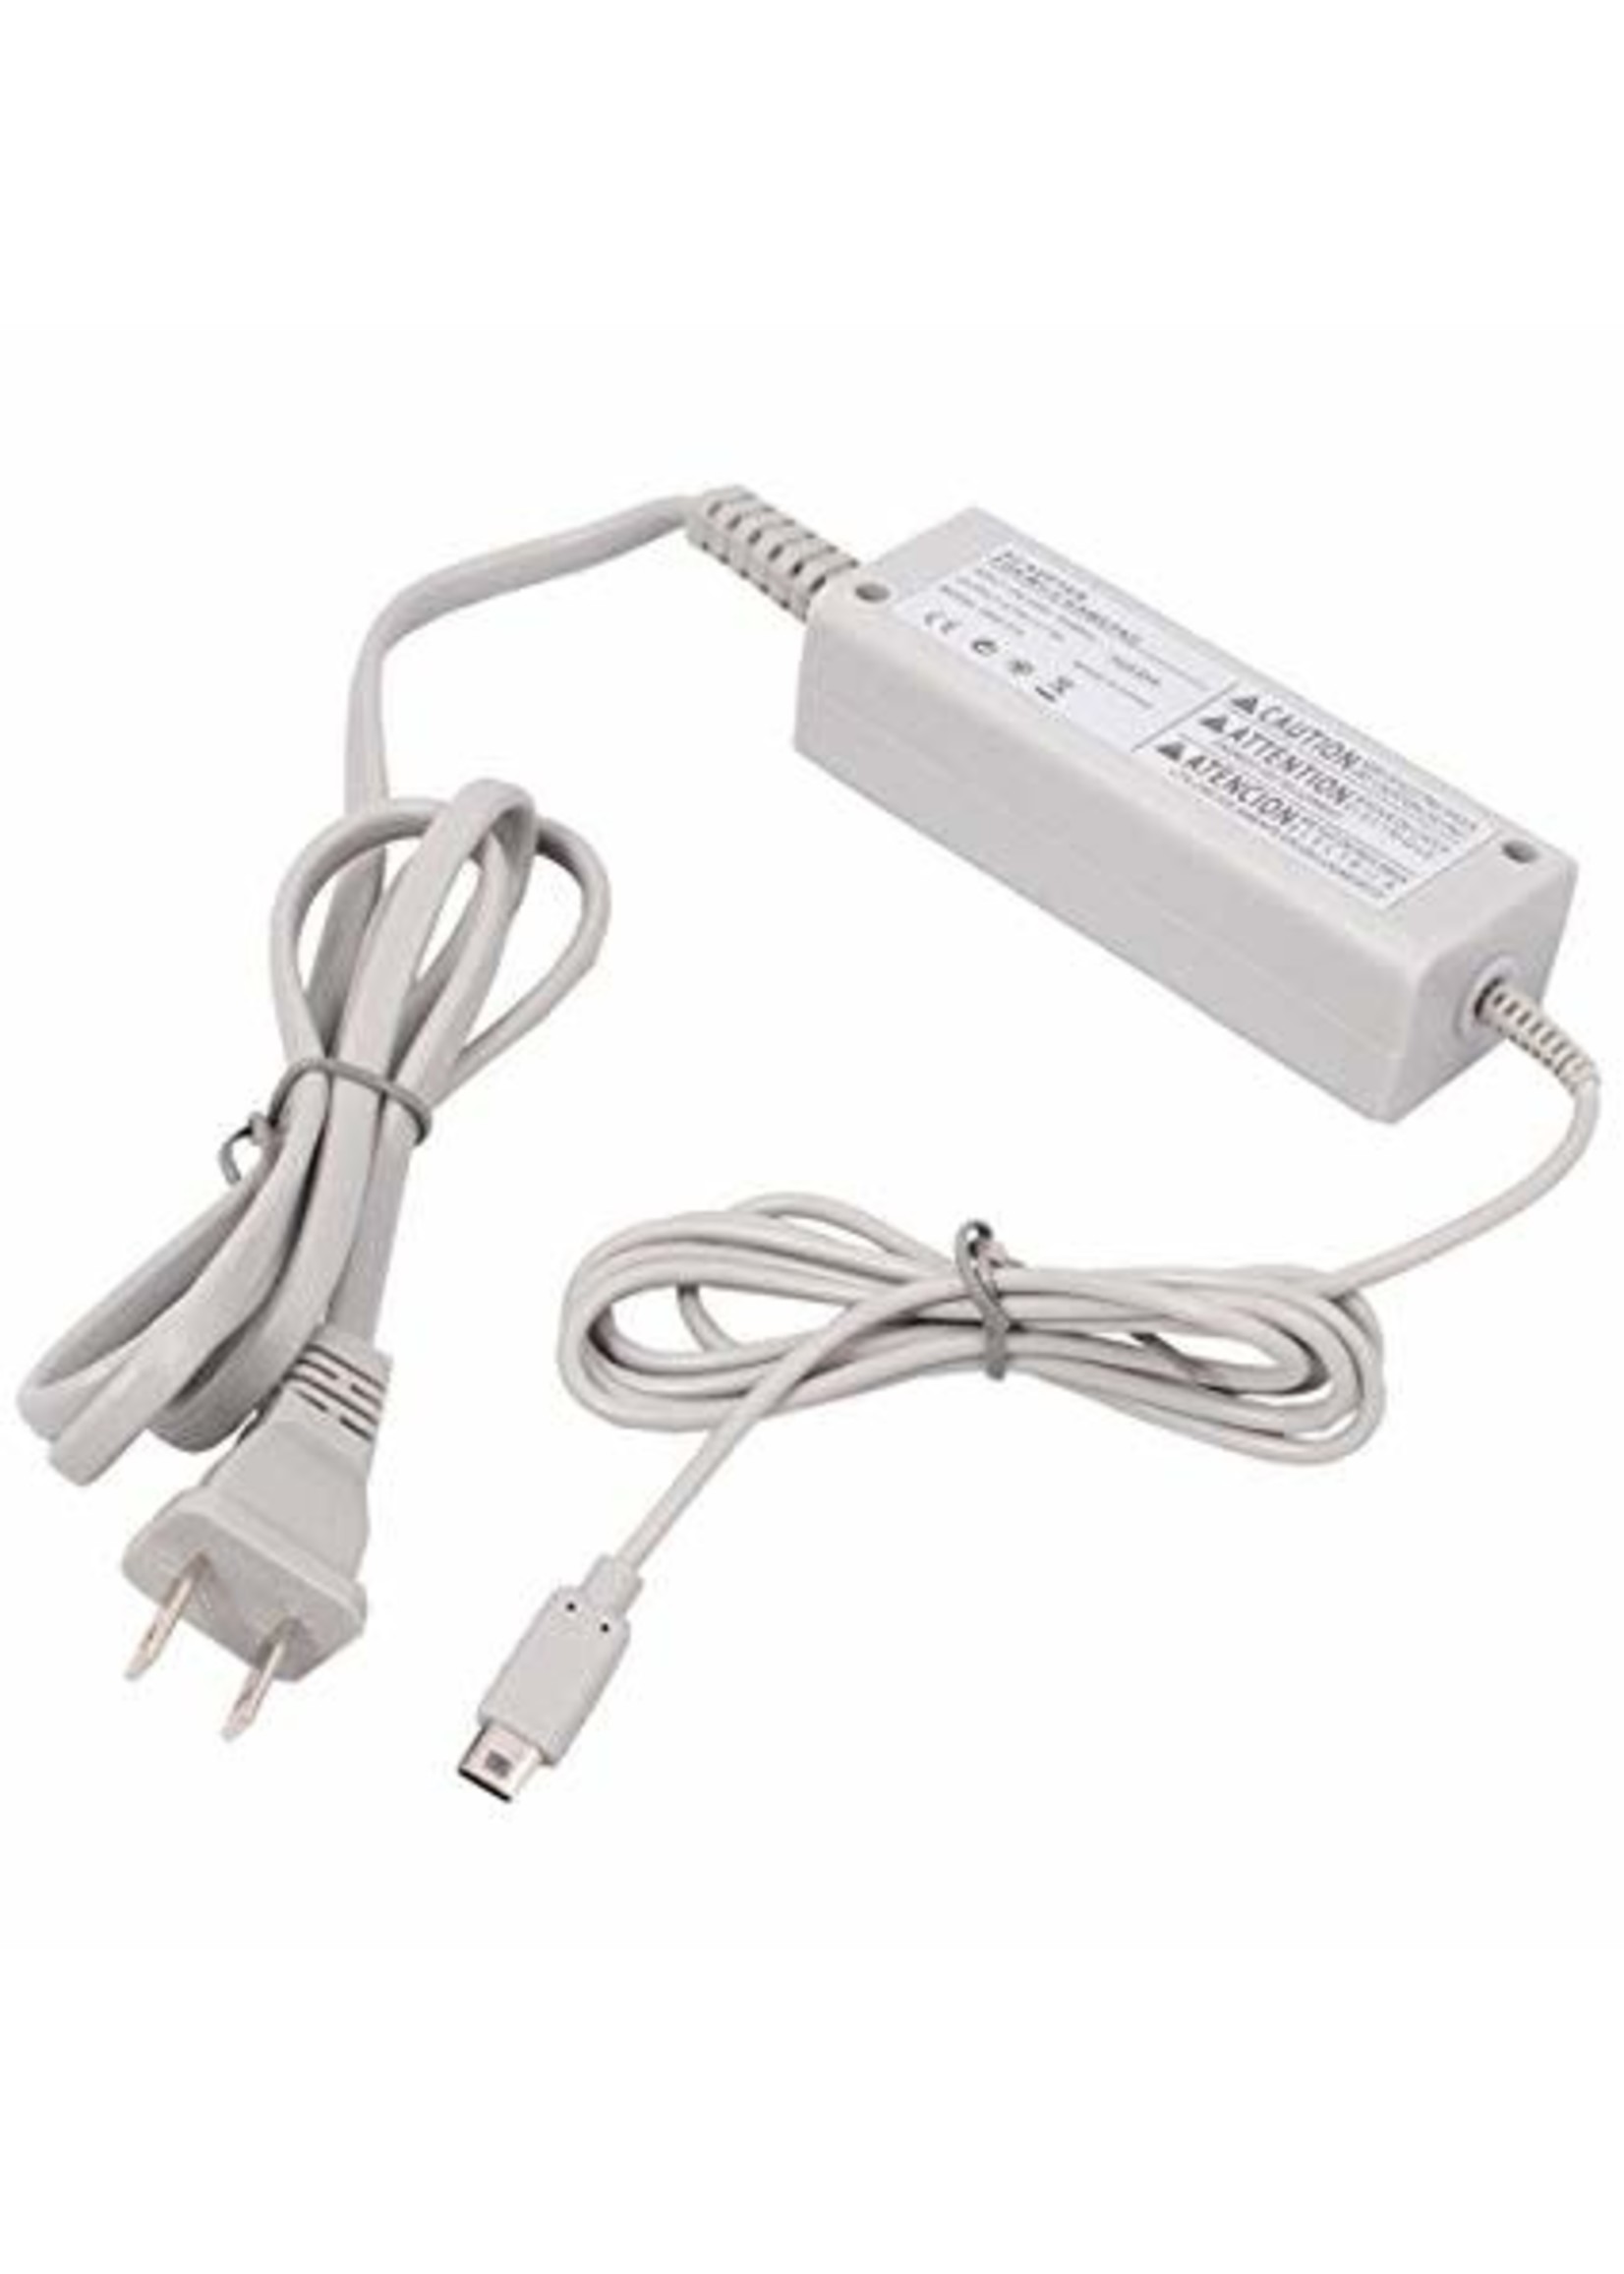 WiiU GamePad AC Adaptor Charger